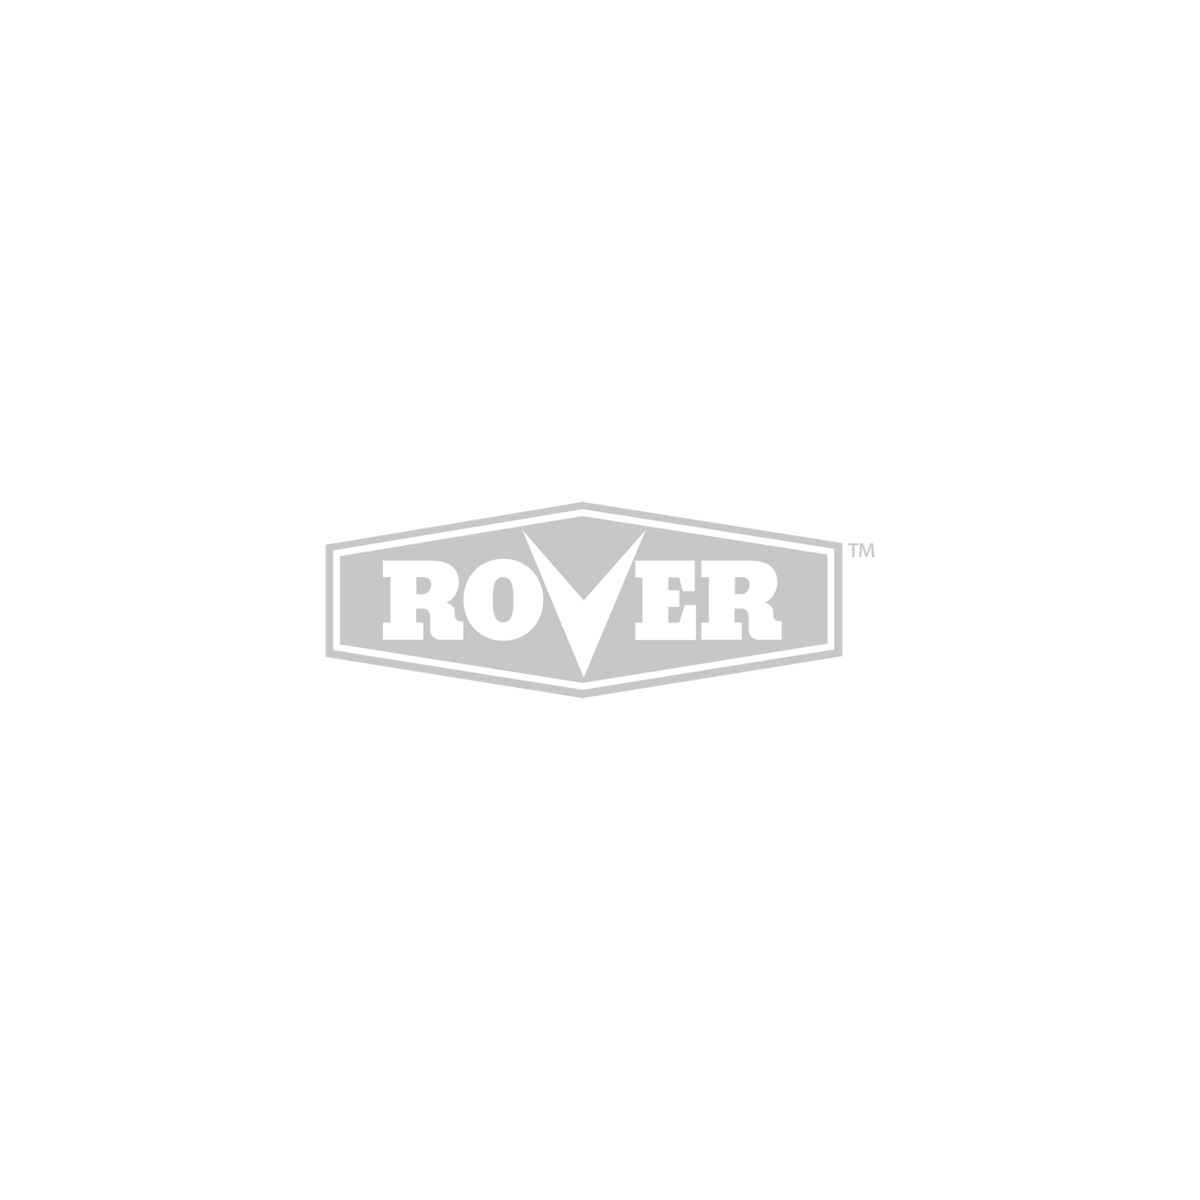 547cc Rover Engine - 5 Year Rover Domestic Warranty.